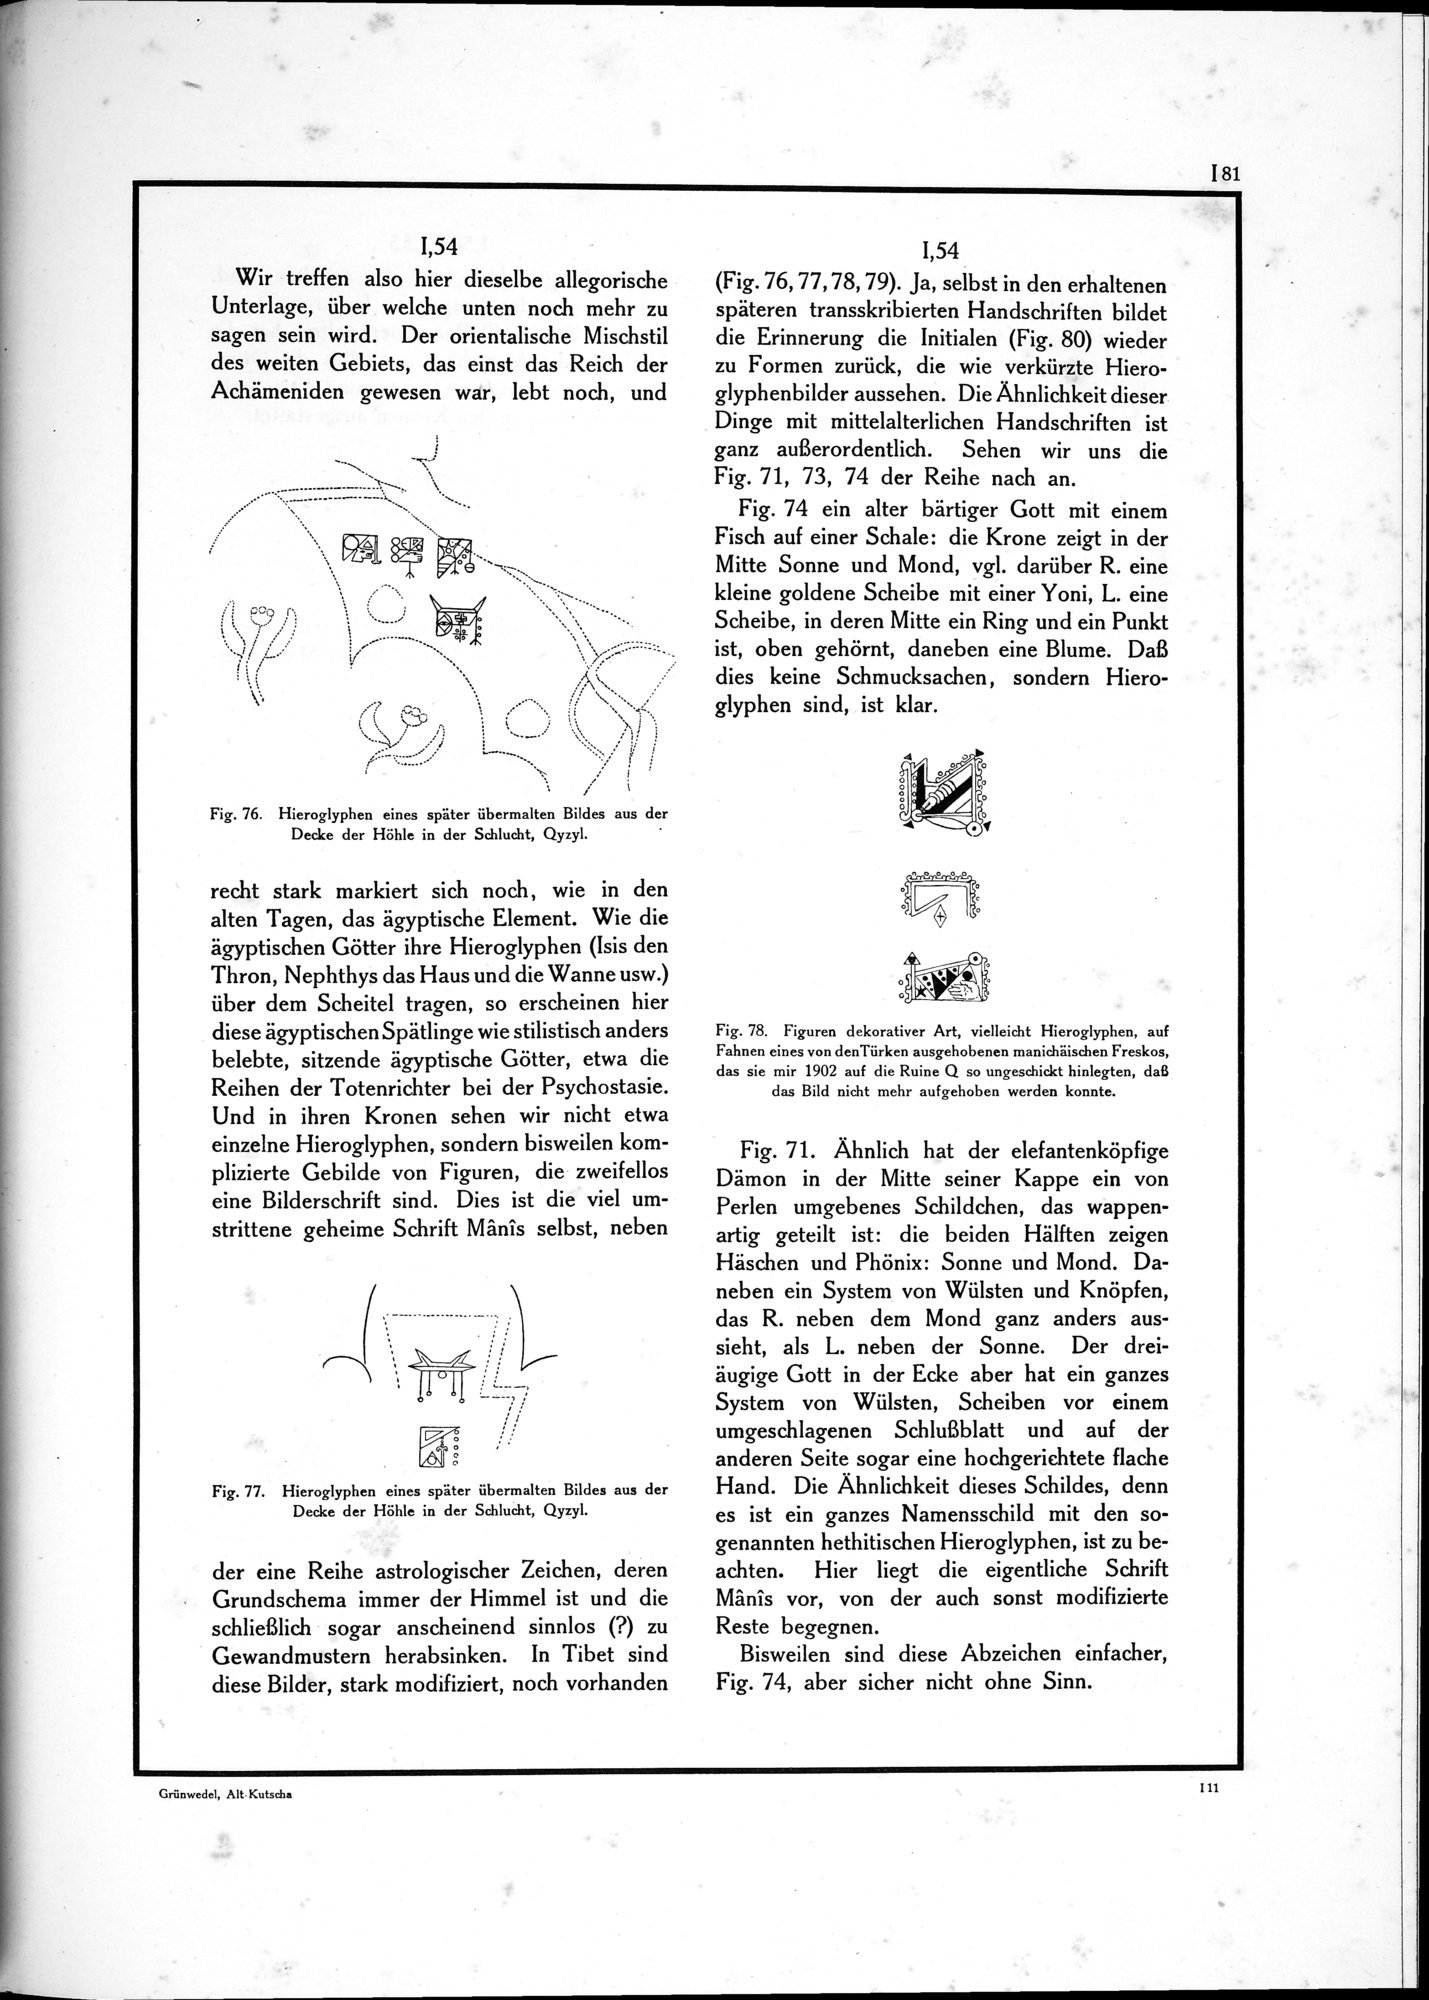 Alt-Kutscha : vol.1 / Page 93 (Grayscale High Resolution Image)